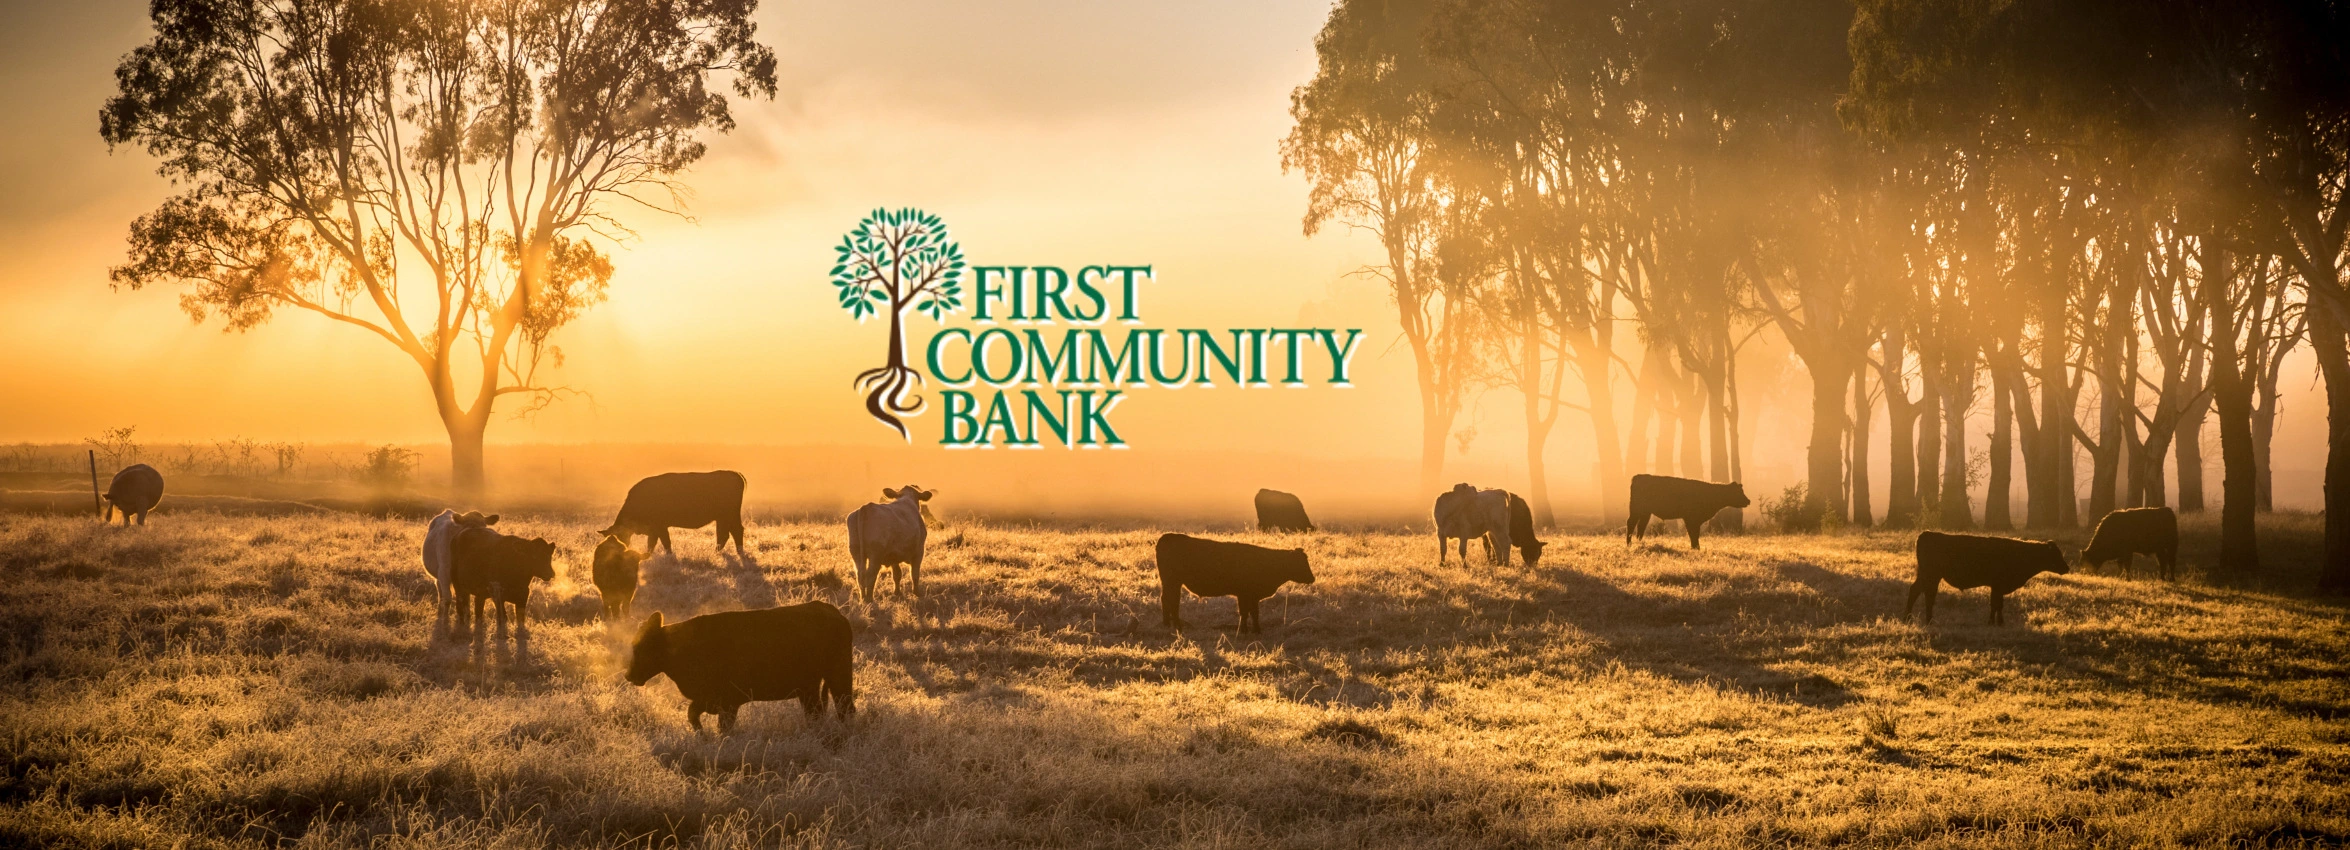 First-Community-Bank_Desktop_ET